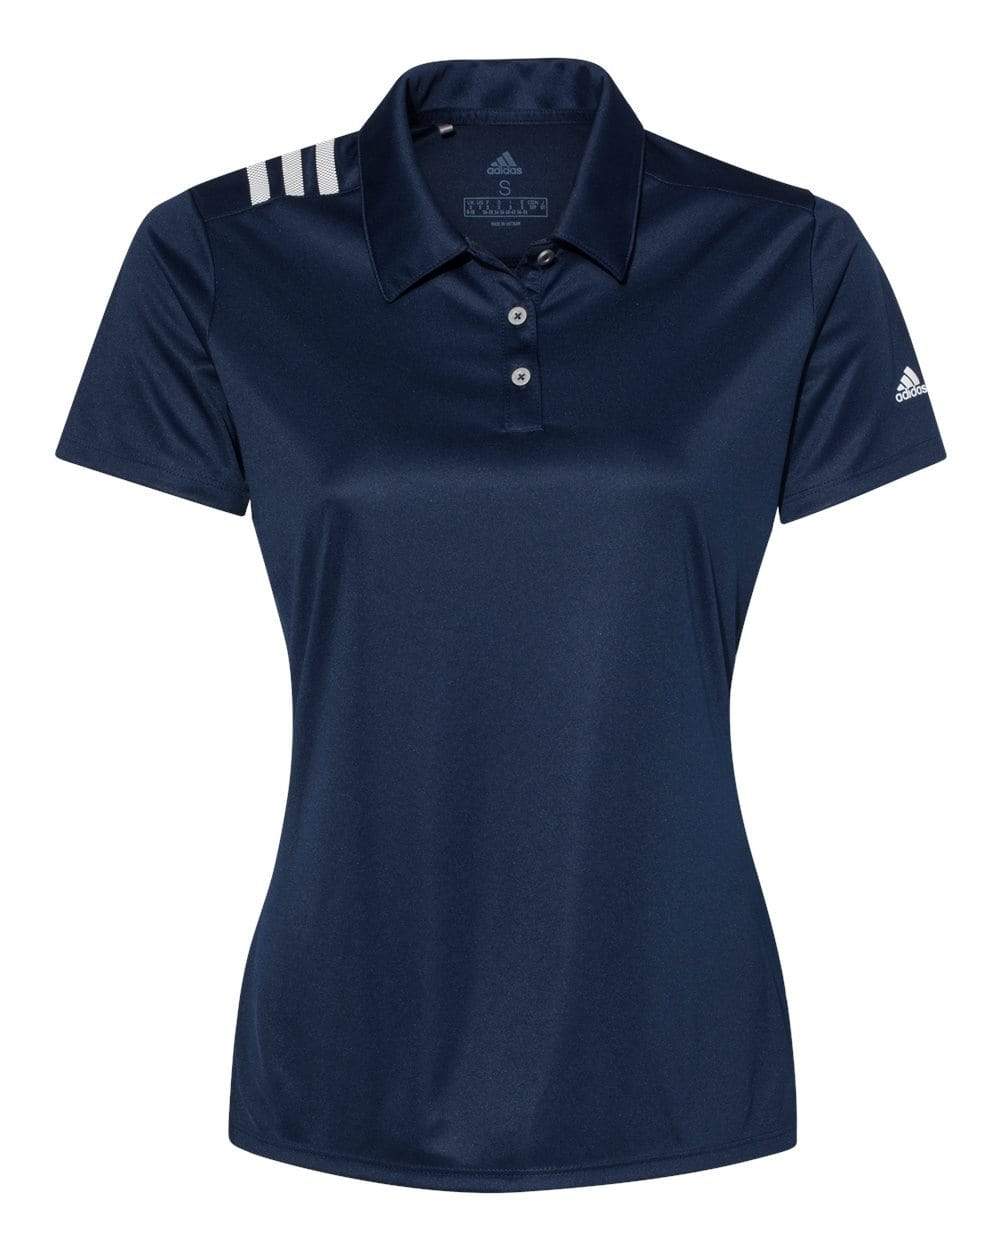 adidas Polos S / Collegiate Navy/White adidas - Women's 3-Stripes Vertical Shoulder Sport Shirt